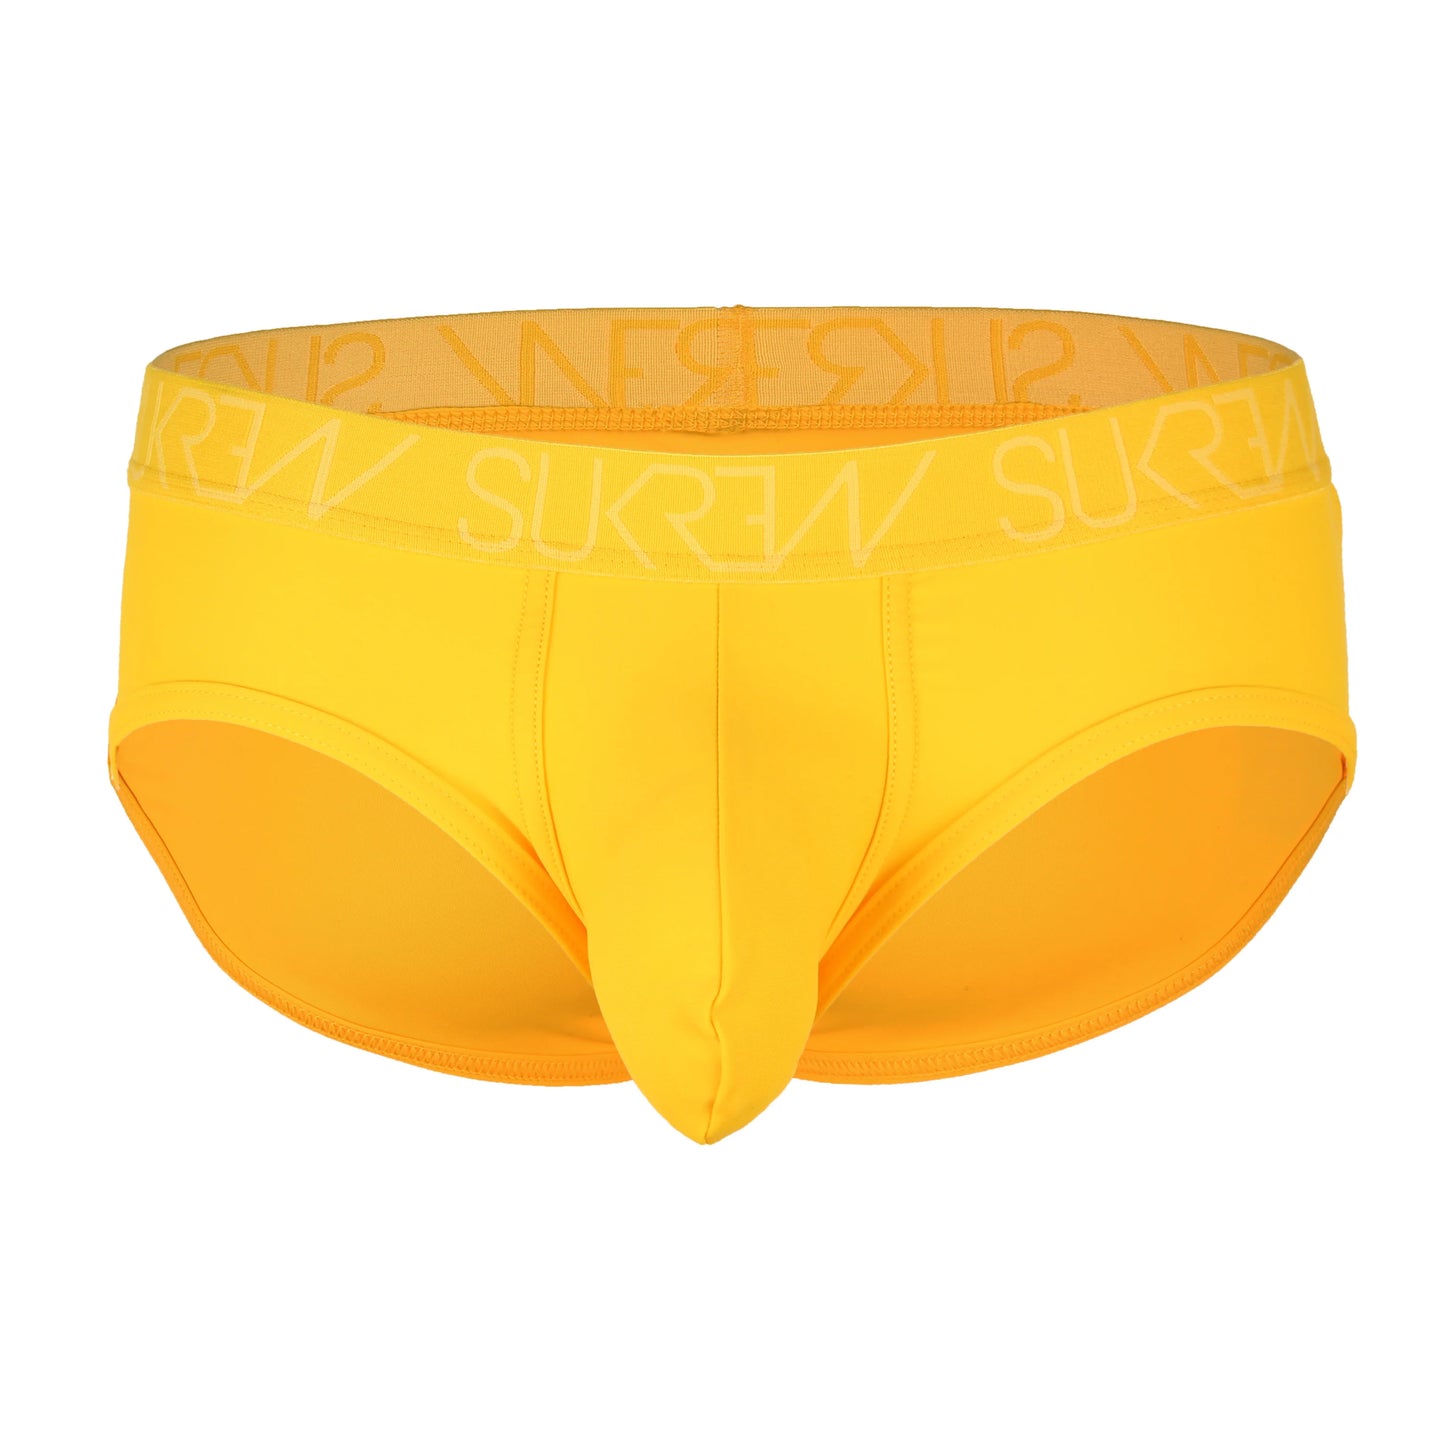 SUKREW - Apex Brief - Yellow - Large